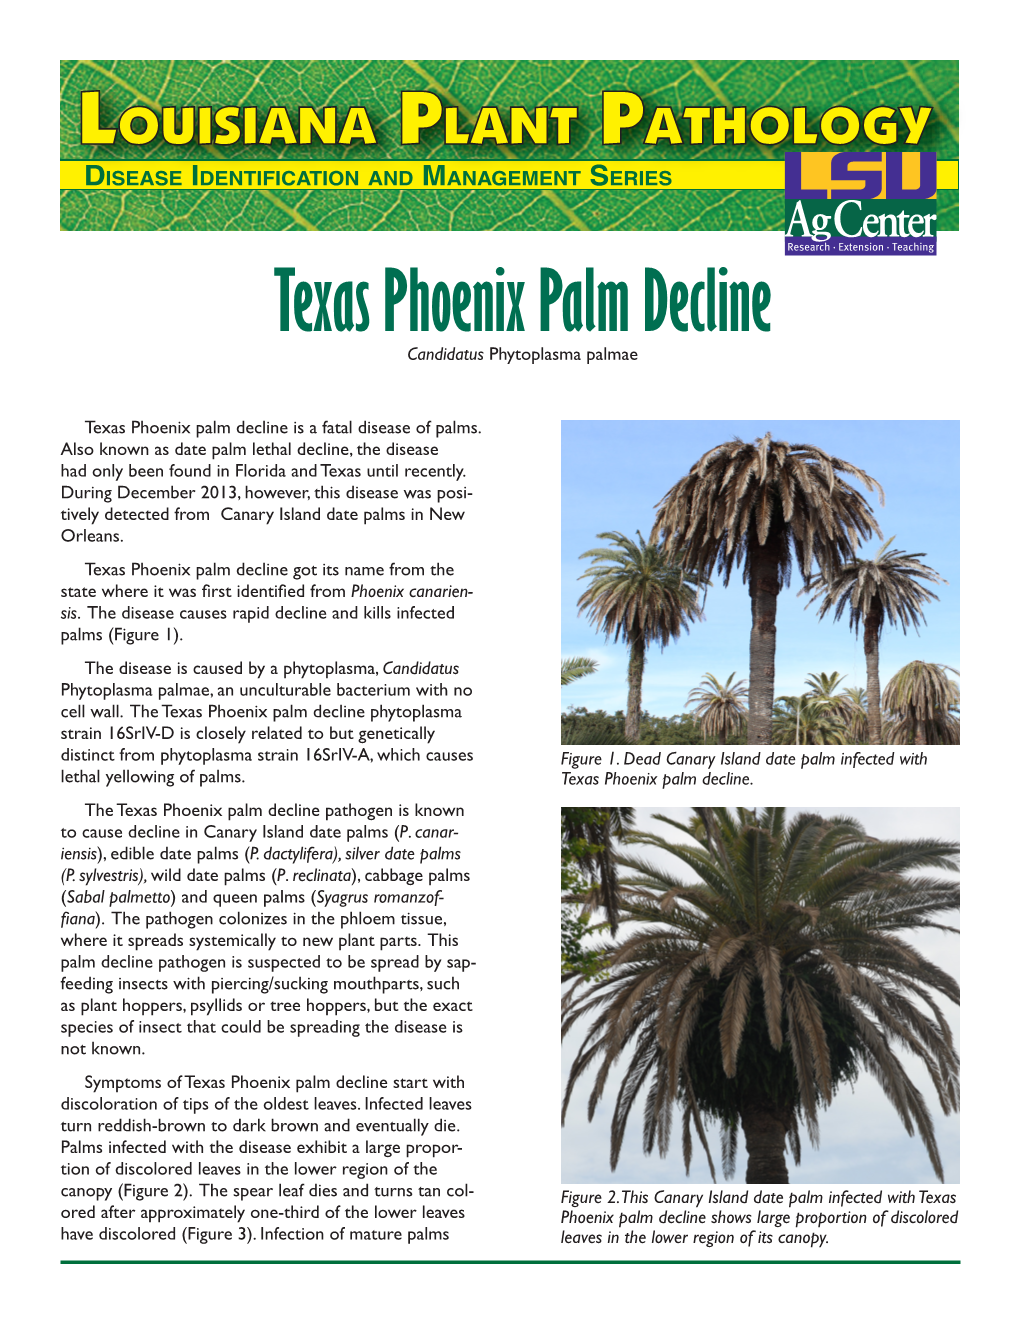 Texas Phoenix Palm Decline Candidatus Phytoplasma Palmae